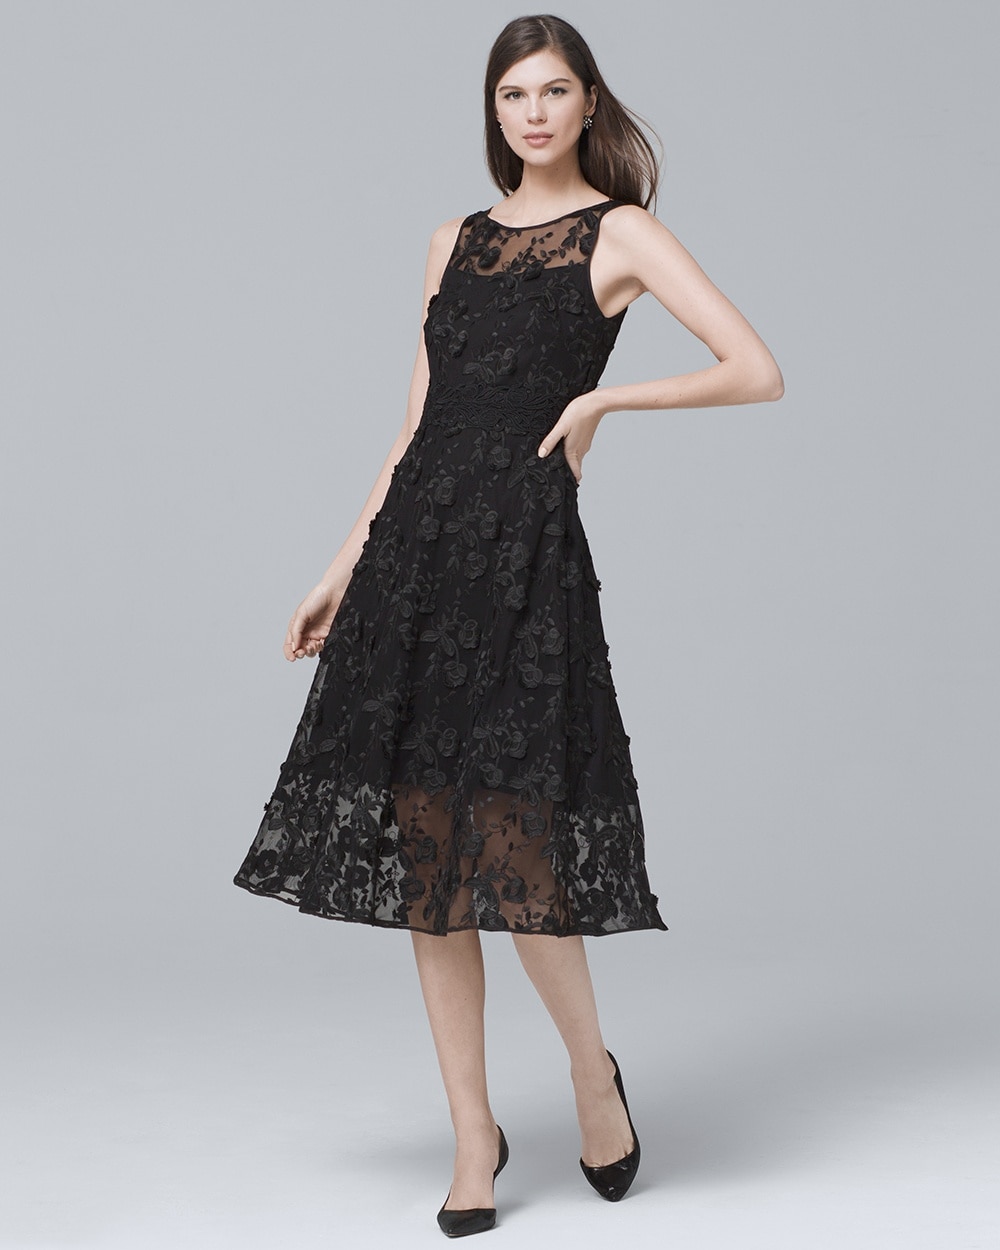 a black lace dress